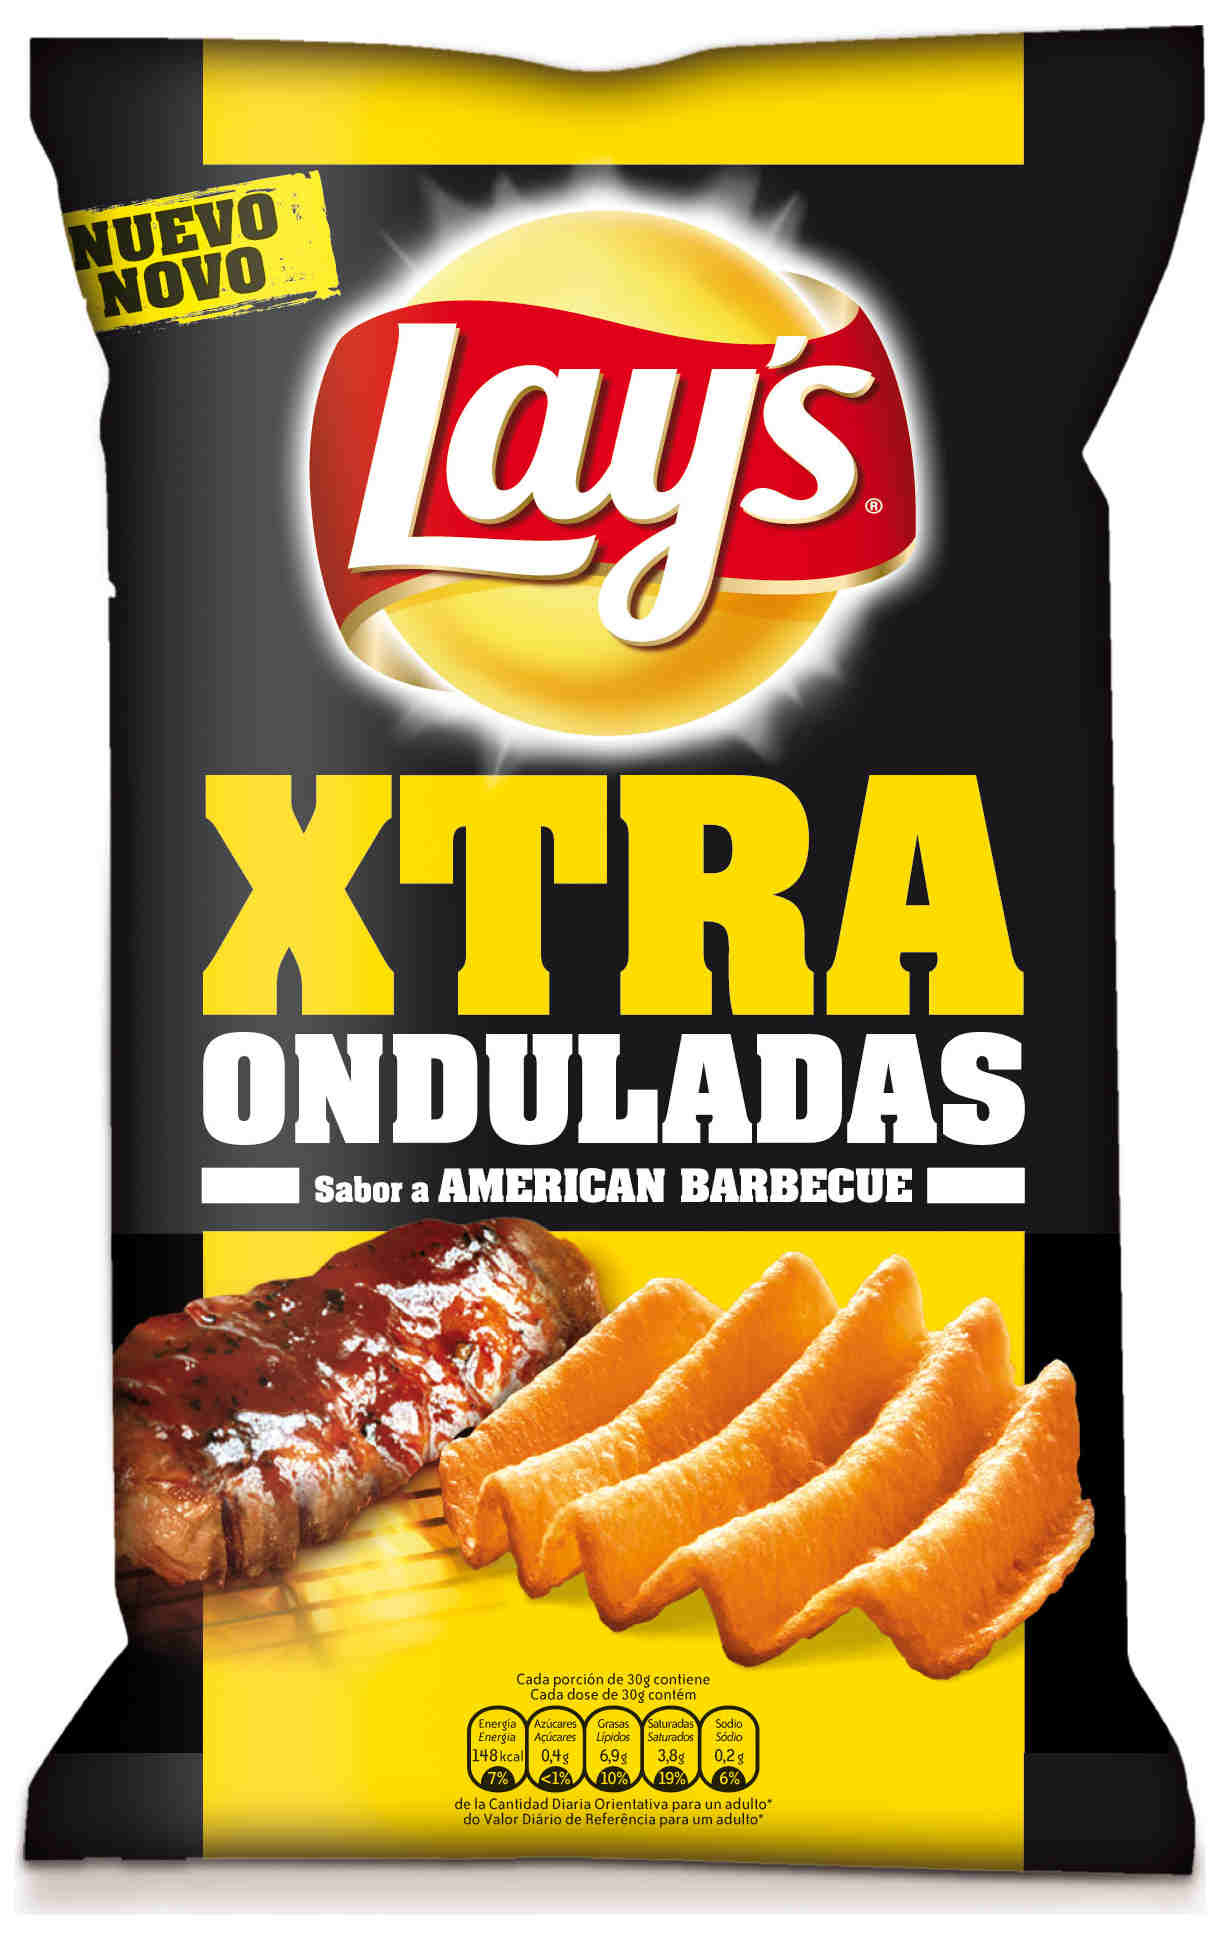 Patatas fritas XTRA onduladas sabor american barbecue - Product - es